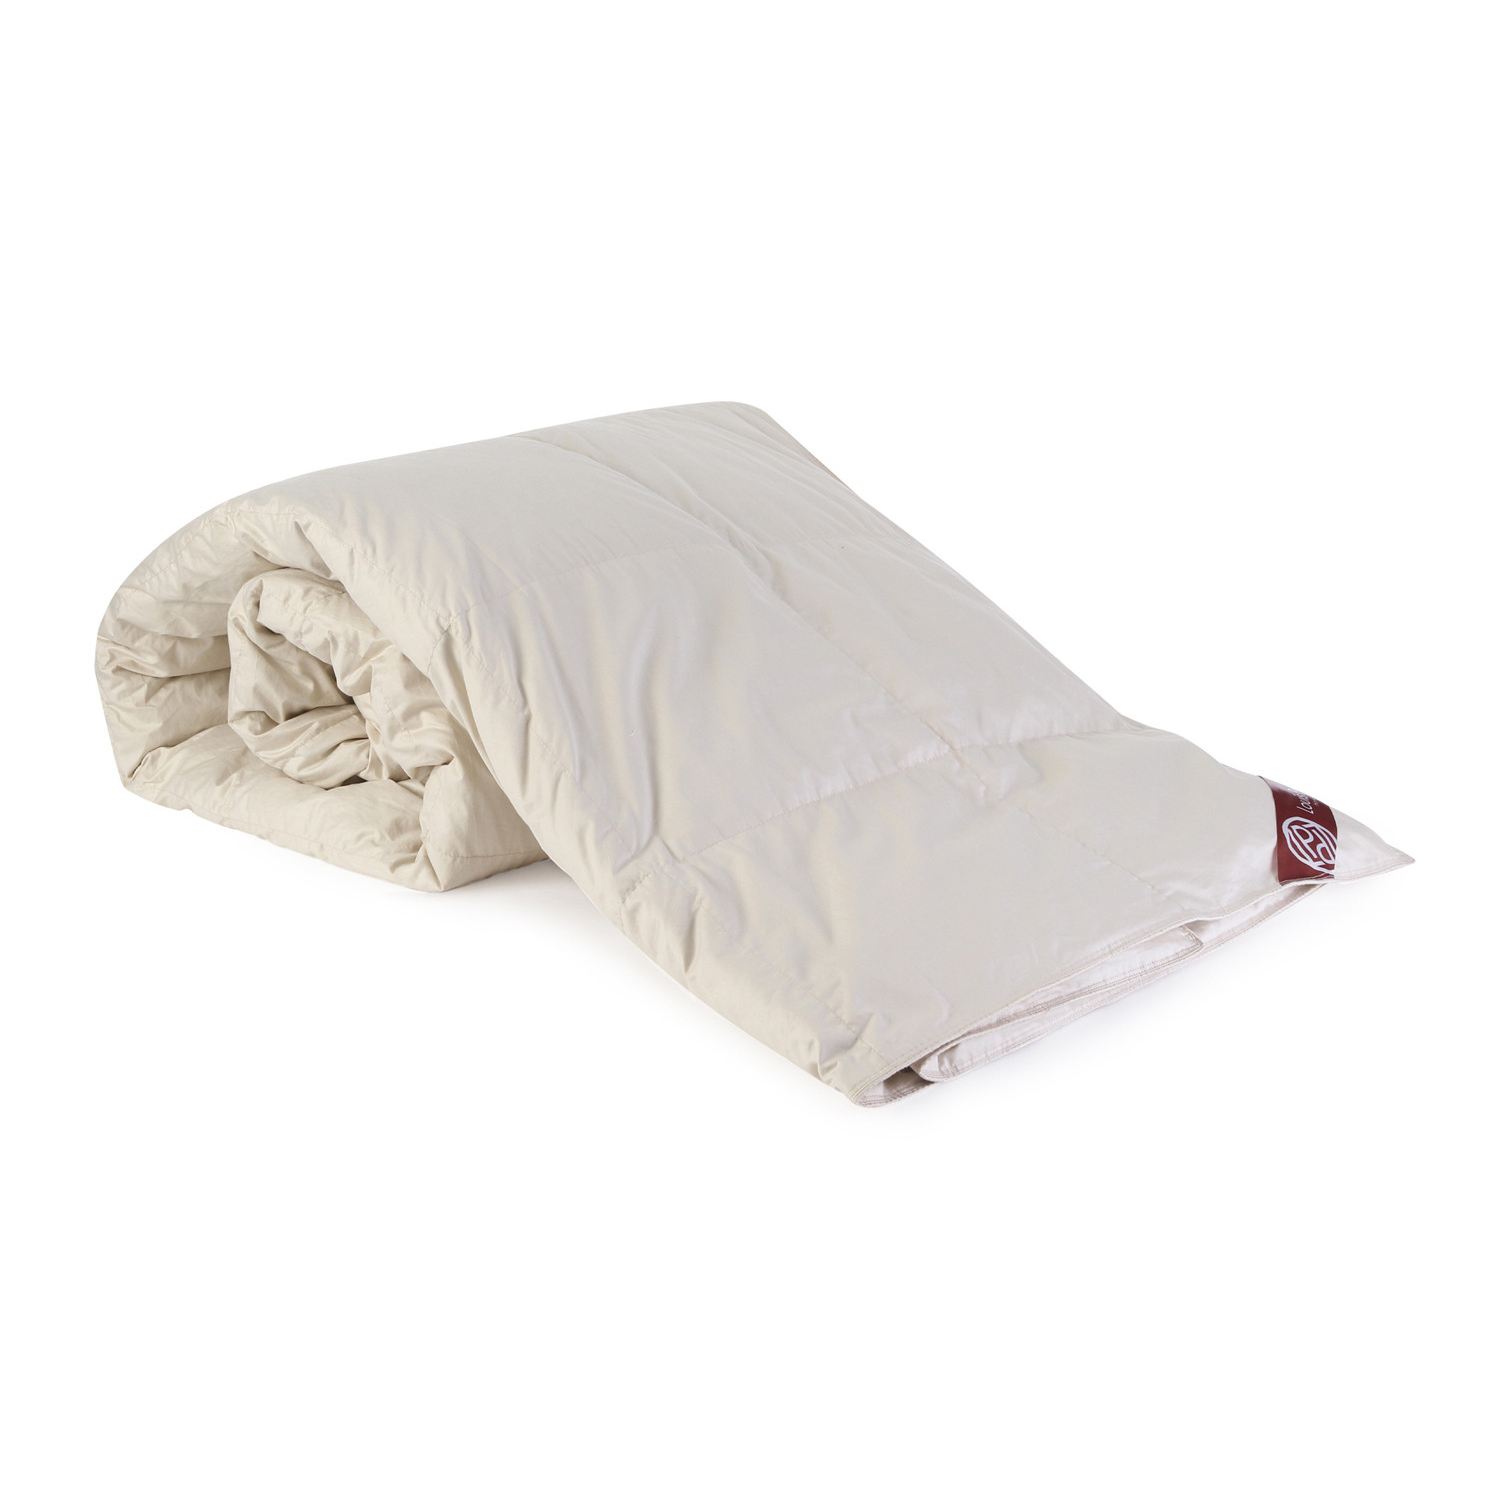 Пуховое одеяло Louis Pascal Николь бежевое 140х205 см (ЛП2022) пуховое одеяло manuela размер 140х205 см